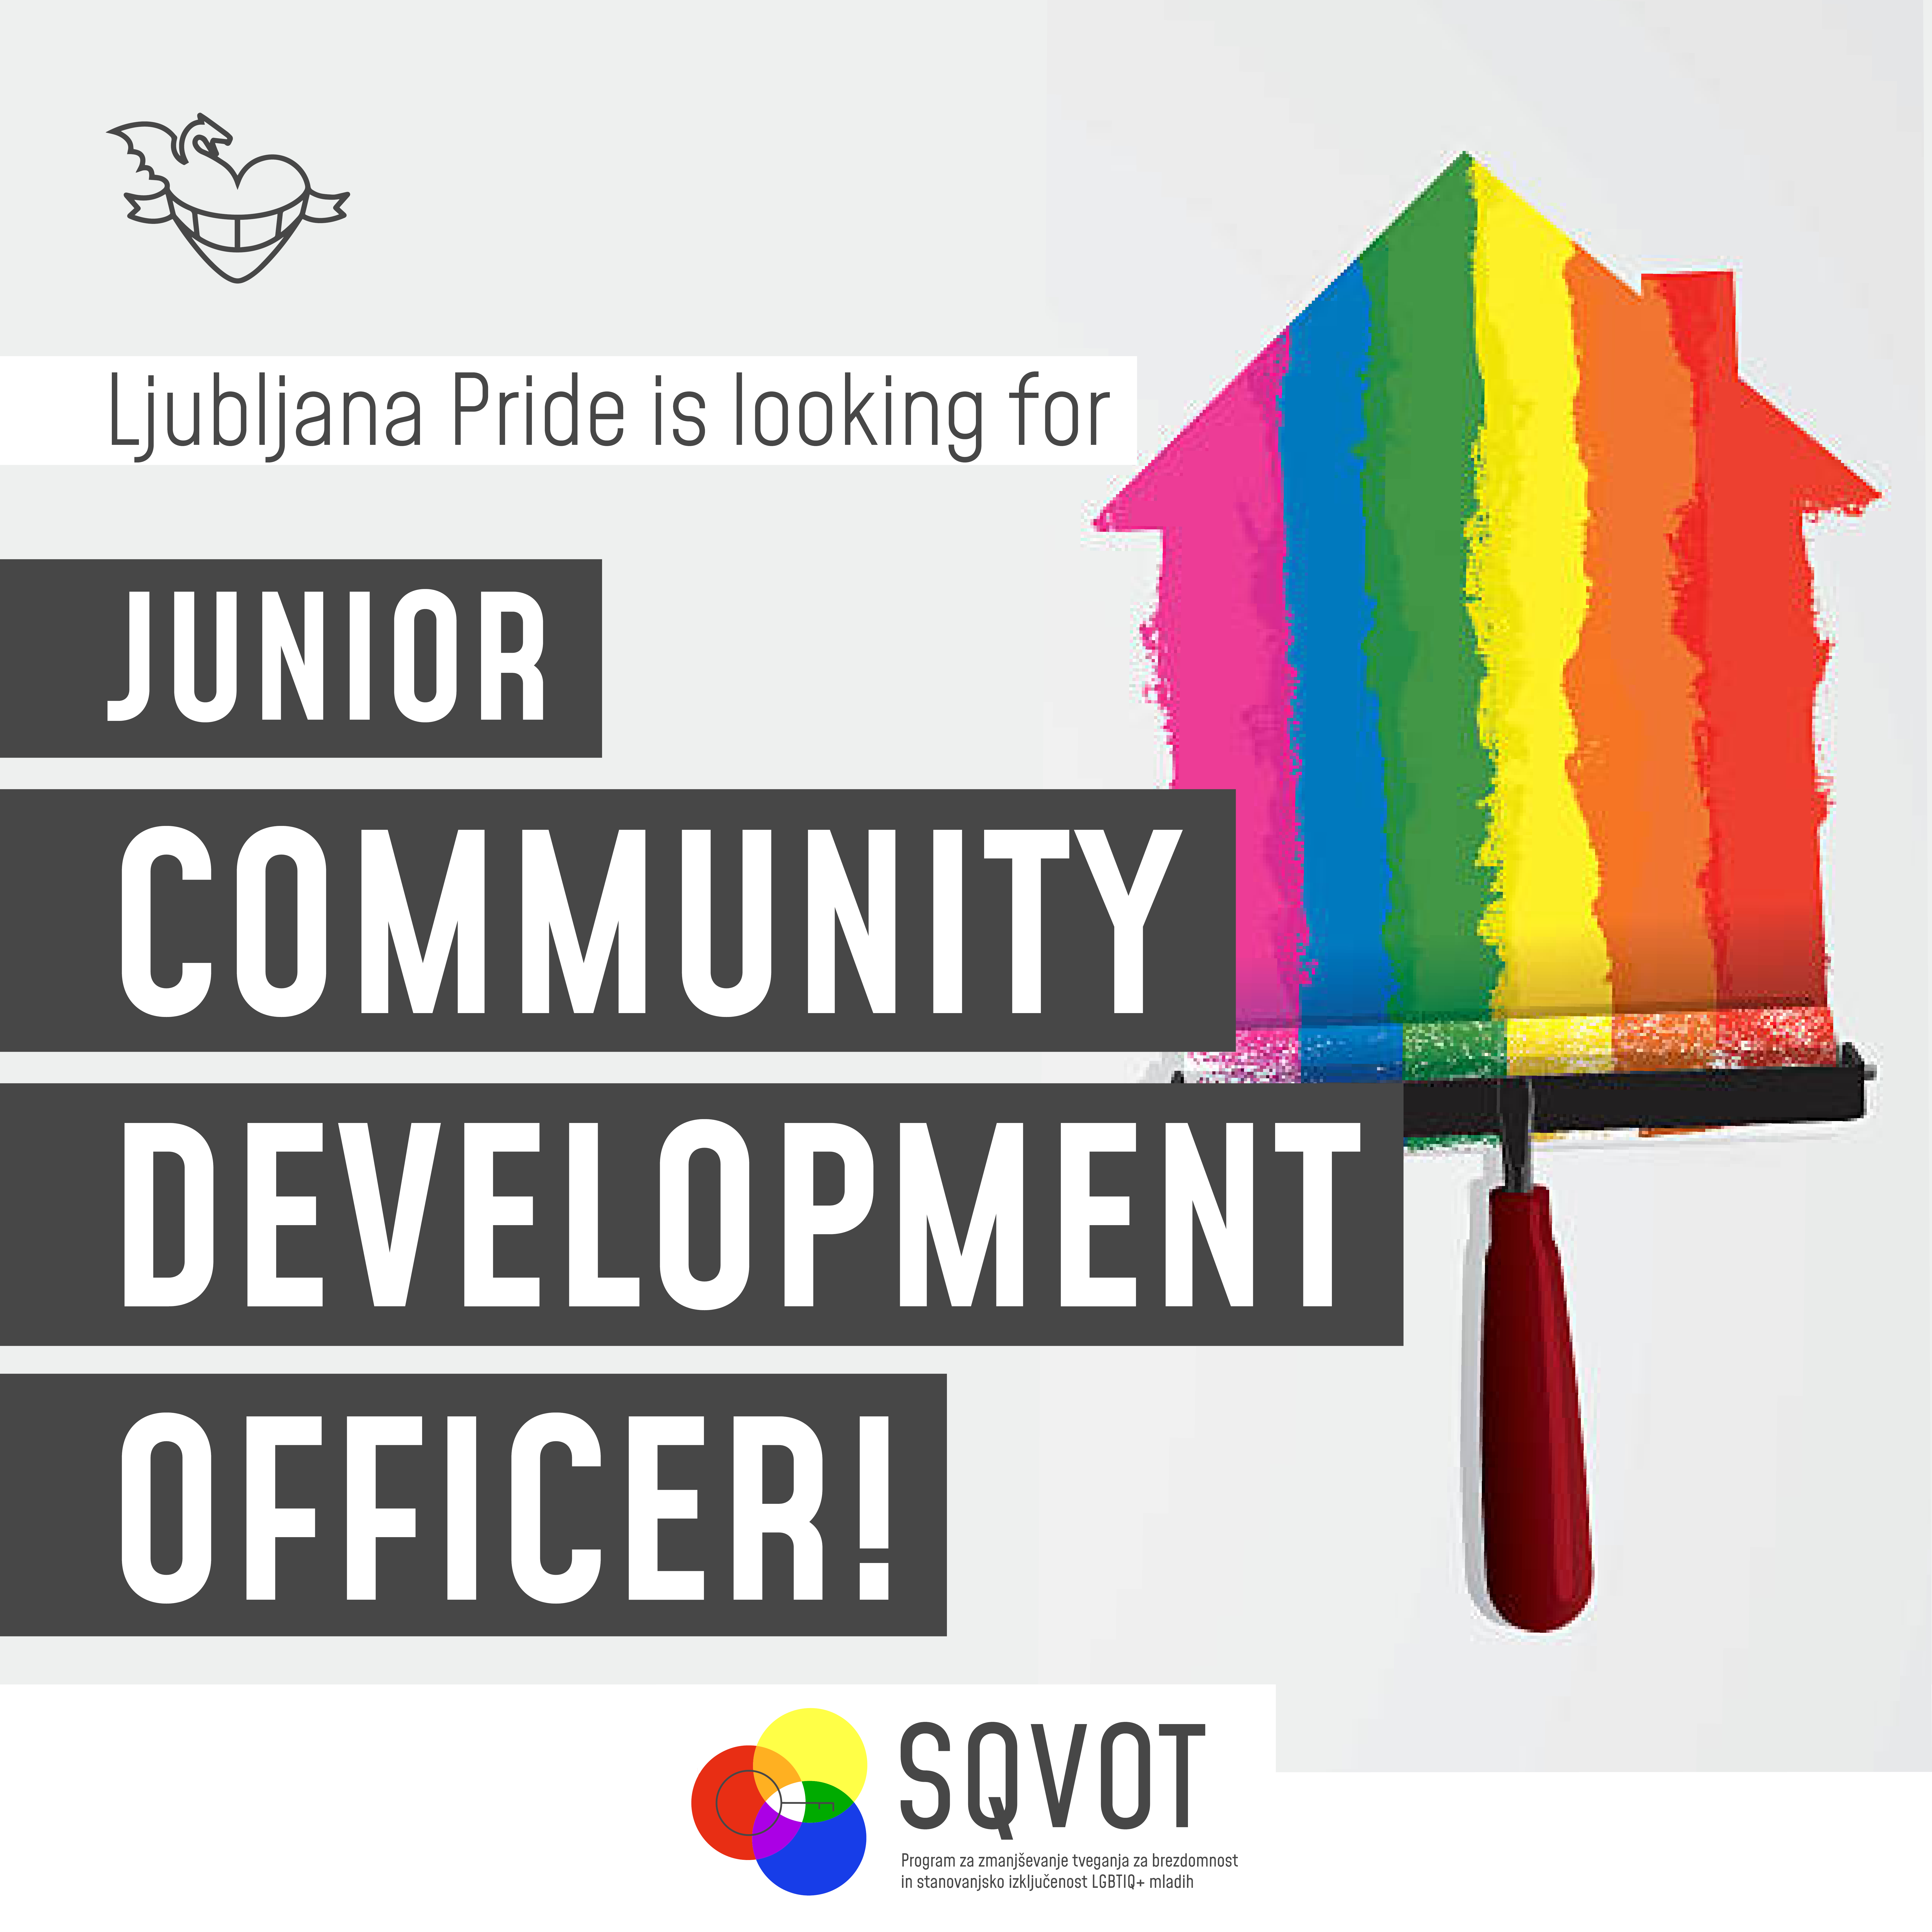 One year (ESC) volunteering opportunity: junior community development officer